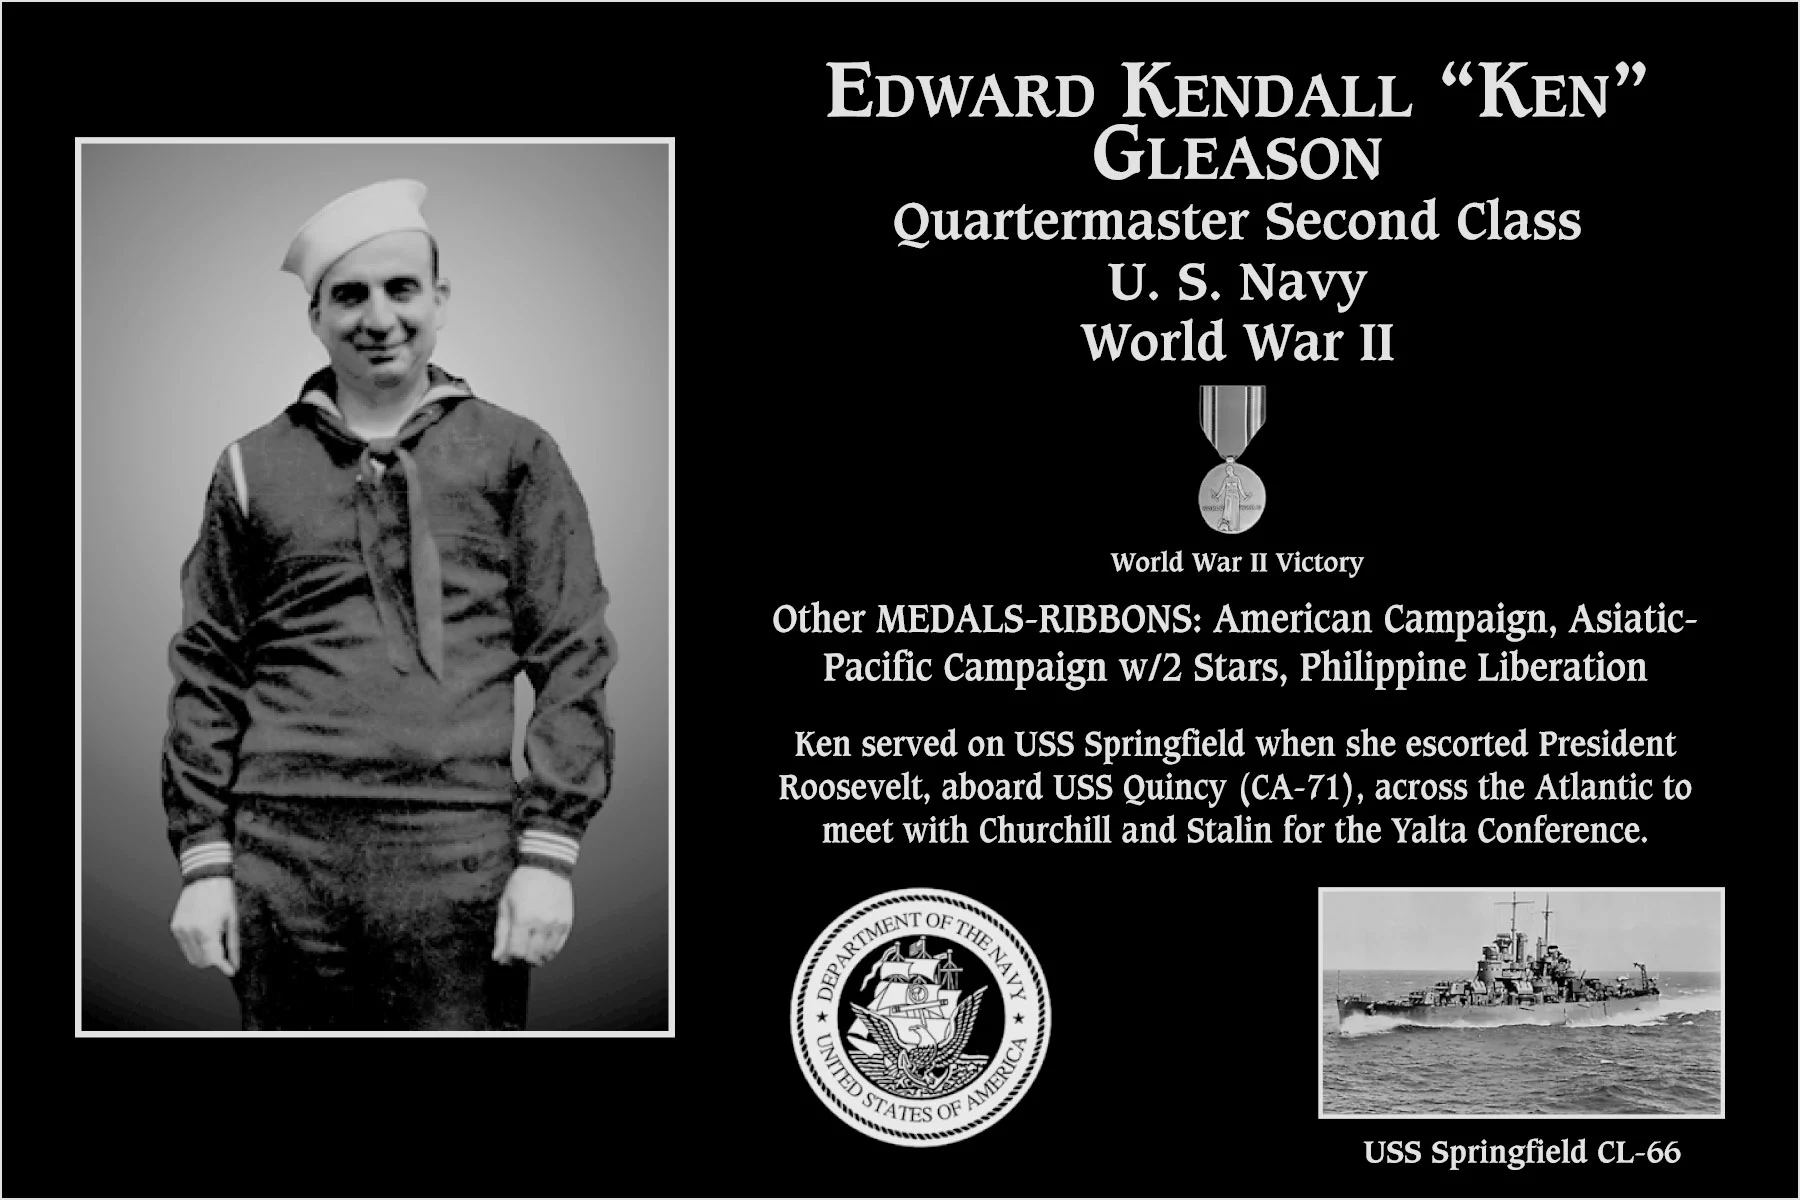 Edward Kendall “Ken” Gleason